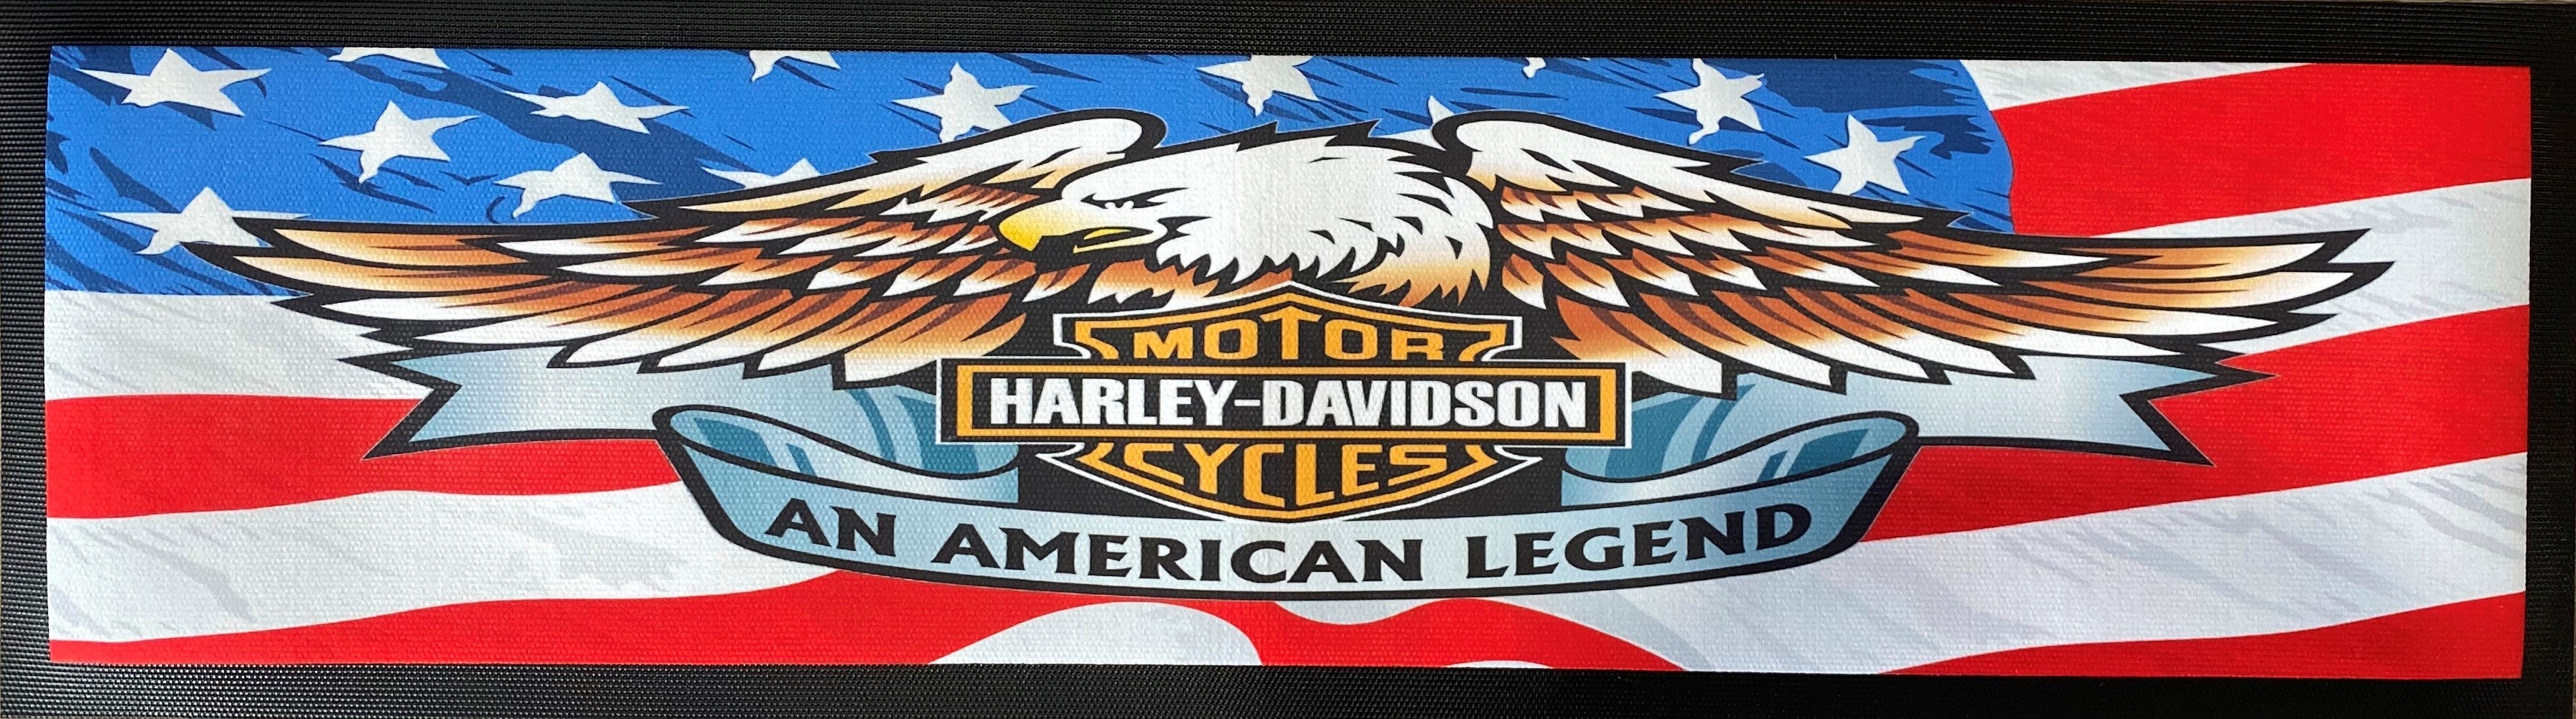 Harley Davidson "American Legend" Premium Rubber-Backed Bar Mat Runner - KING CAVE